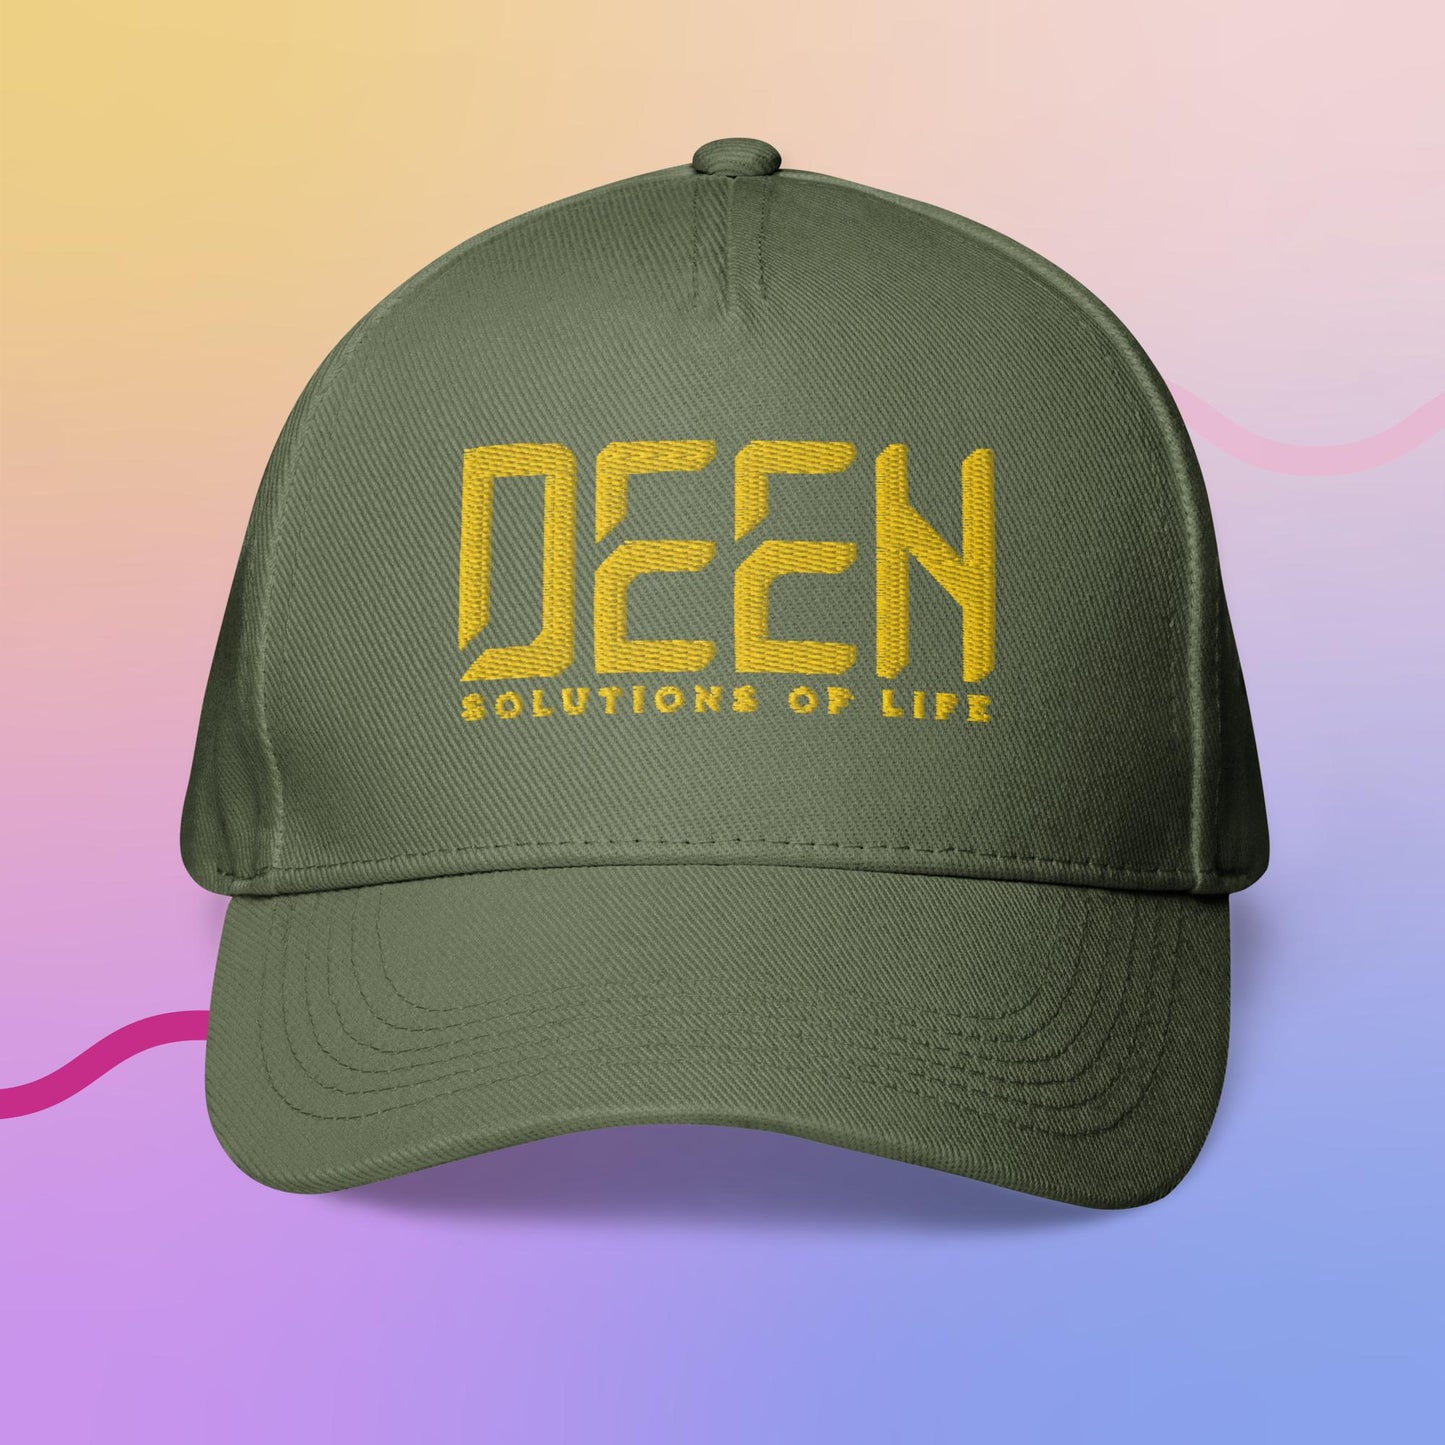 Deen Solutions of life Classic baseball cap